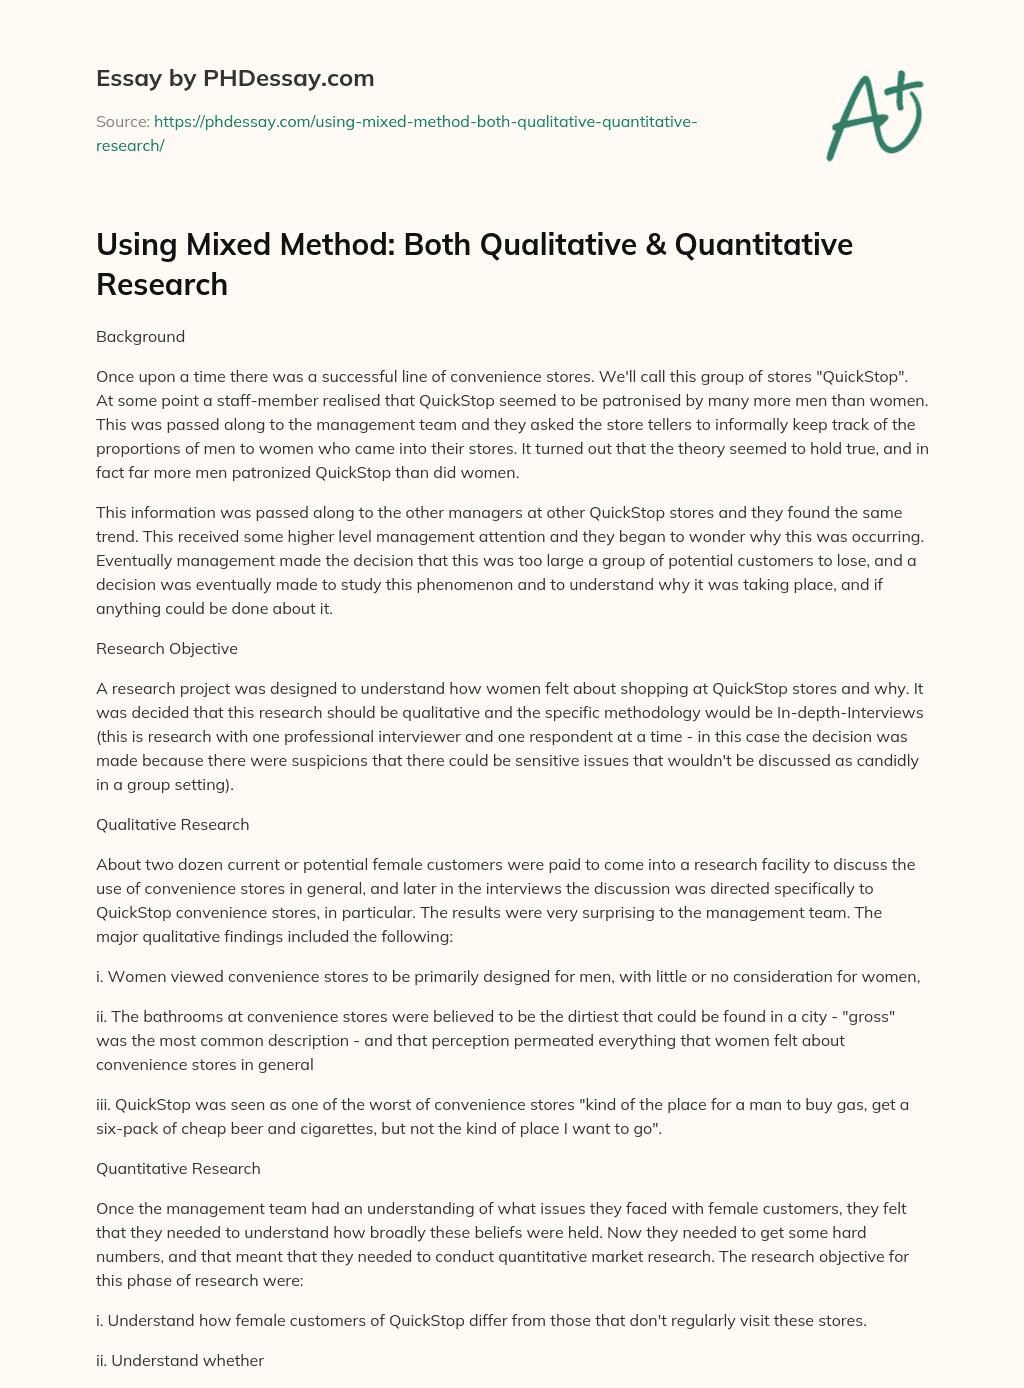 Using Mixed Method: Both Qualitative & Quantitative Research essay